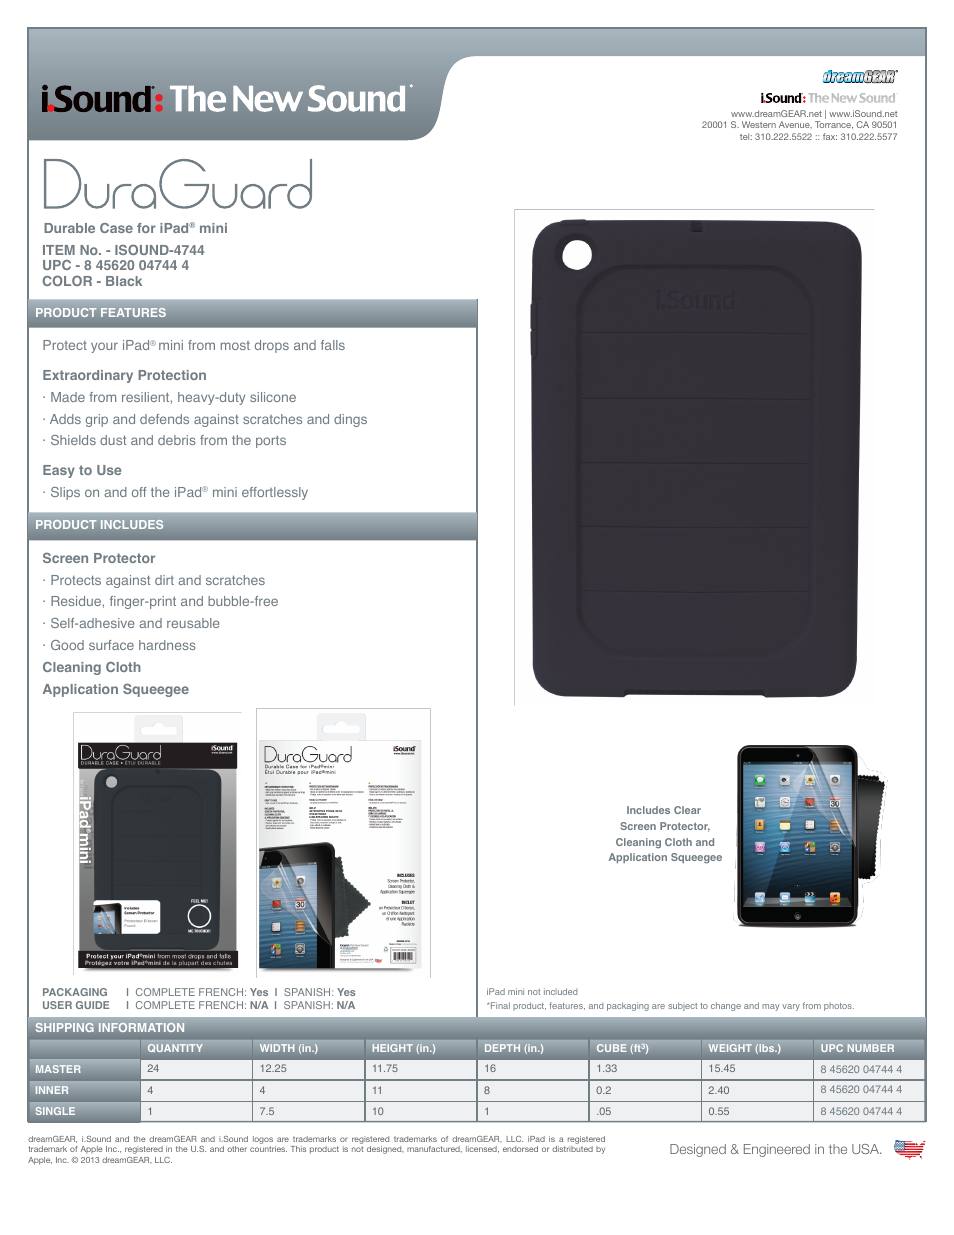 DuraGuard Case for iPadmini with Retina + Screen Protector - Sell Sheet